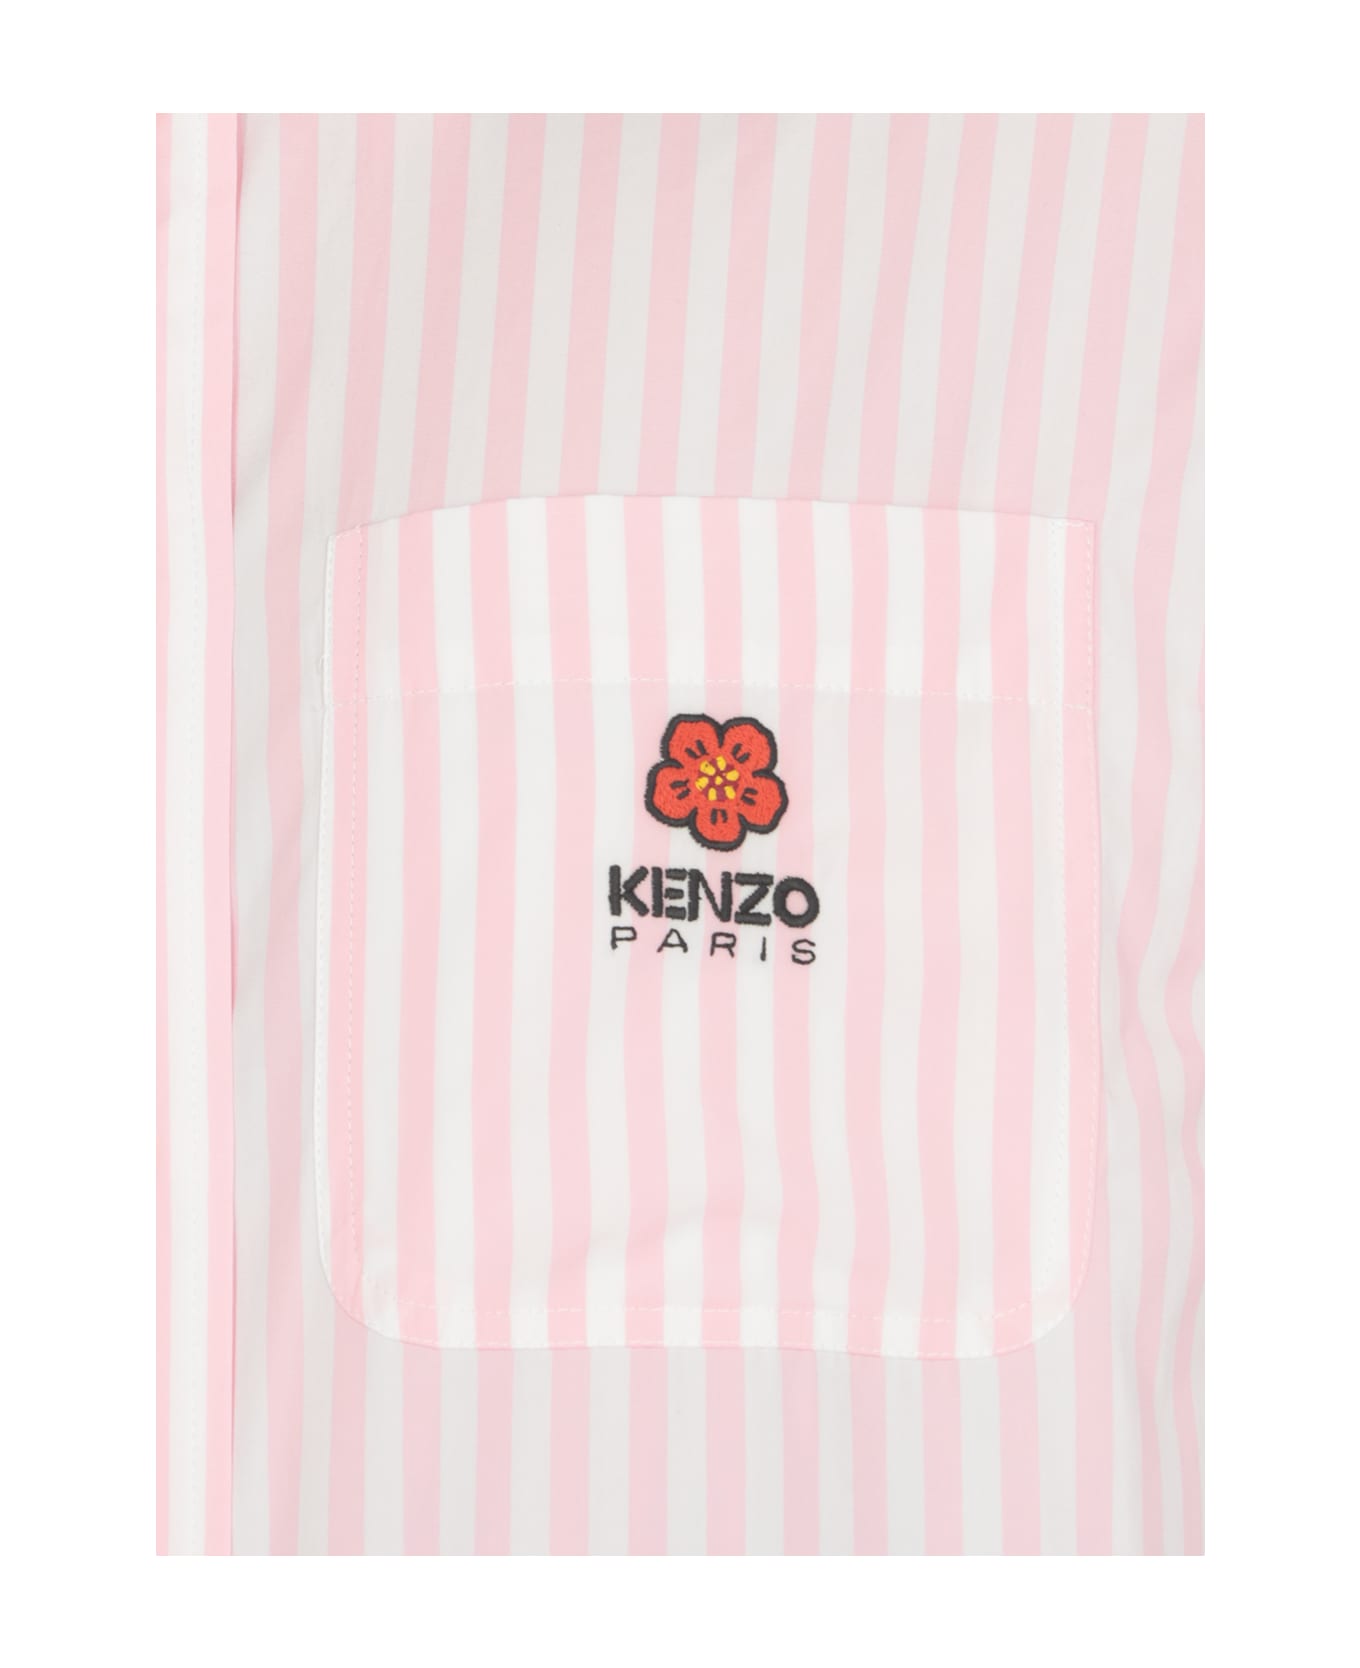 Kenzo Boke 2.0 Shirt - Faded Pink